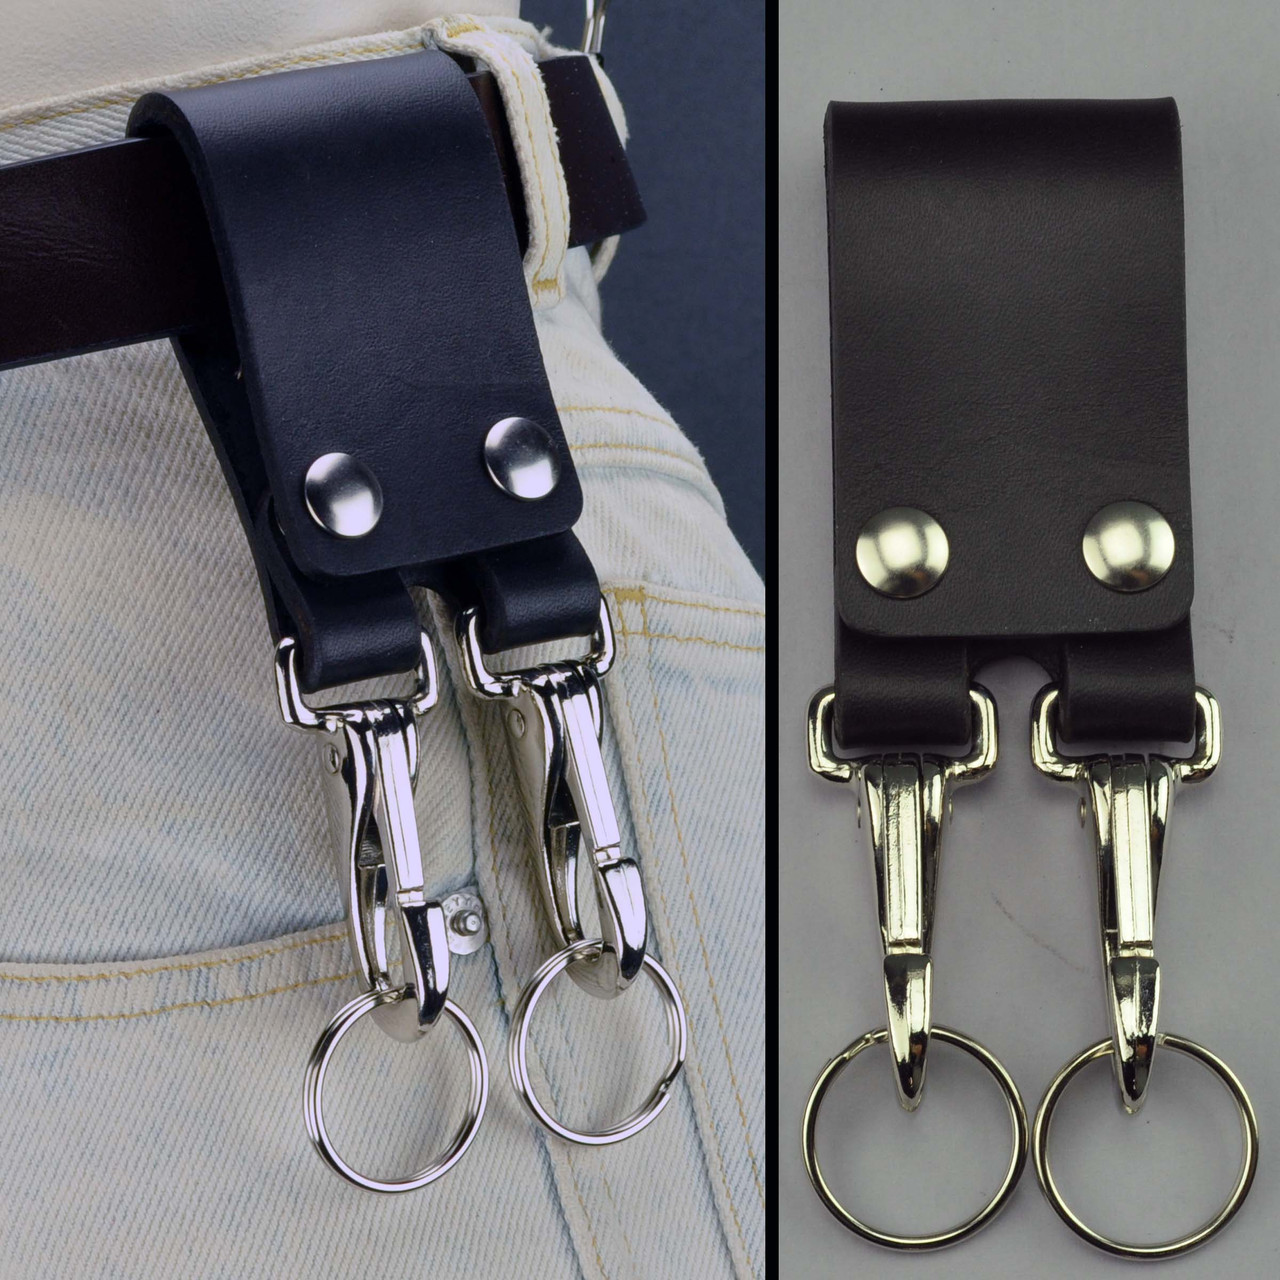 Leather Key Pouch for Belt, Key Holder for Duty Belt